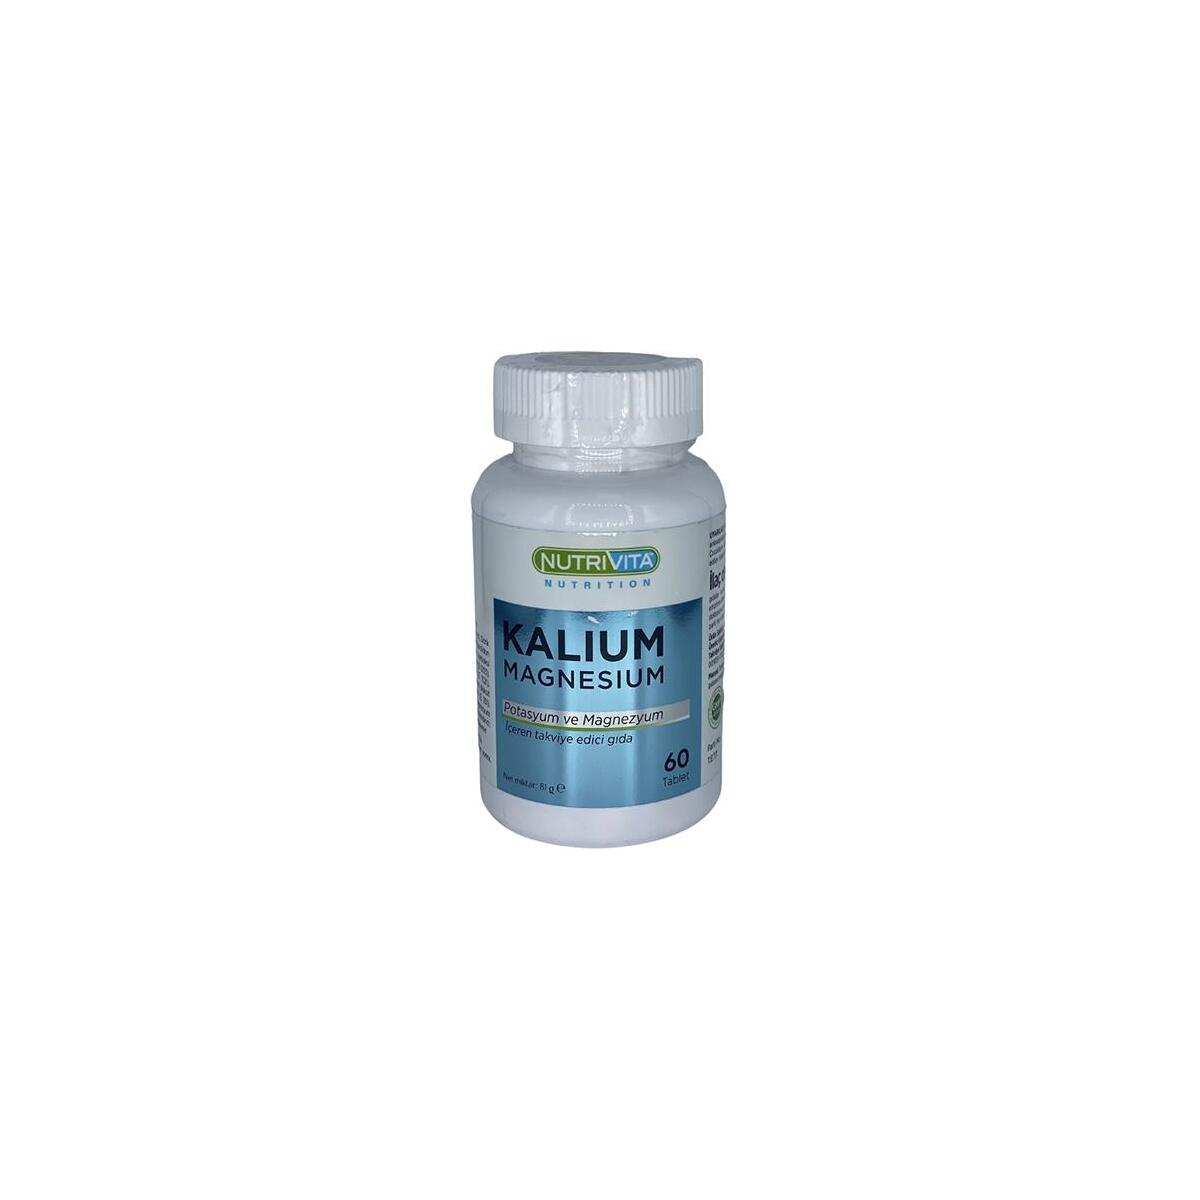 Nutrivita Nutrition Kalium Magnesium 60 Tablet Potasyum Magnezyum Çinko Demir Vitamin B6 B12 Iron